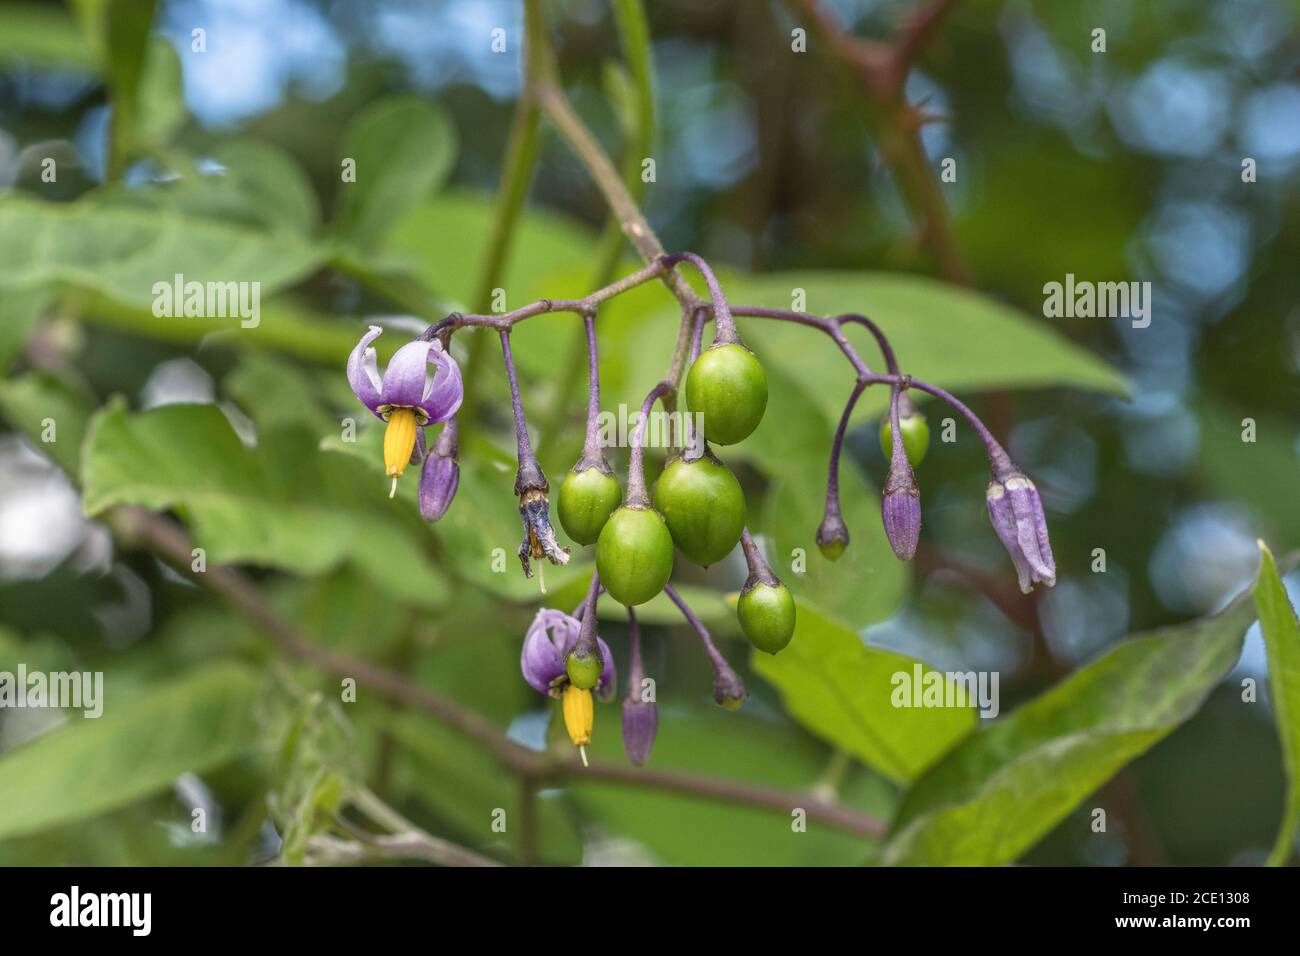 Ripening poisonous berries of Solanum dulcamara - Bittersweet / Woody Nightshade, & purple flowers. Once used as a medicinal plant in herbal remedies. Stock Photo